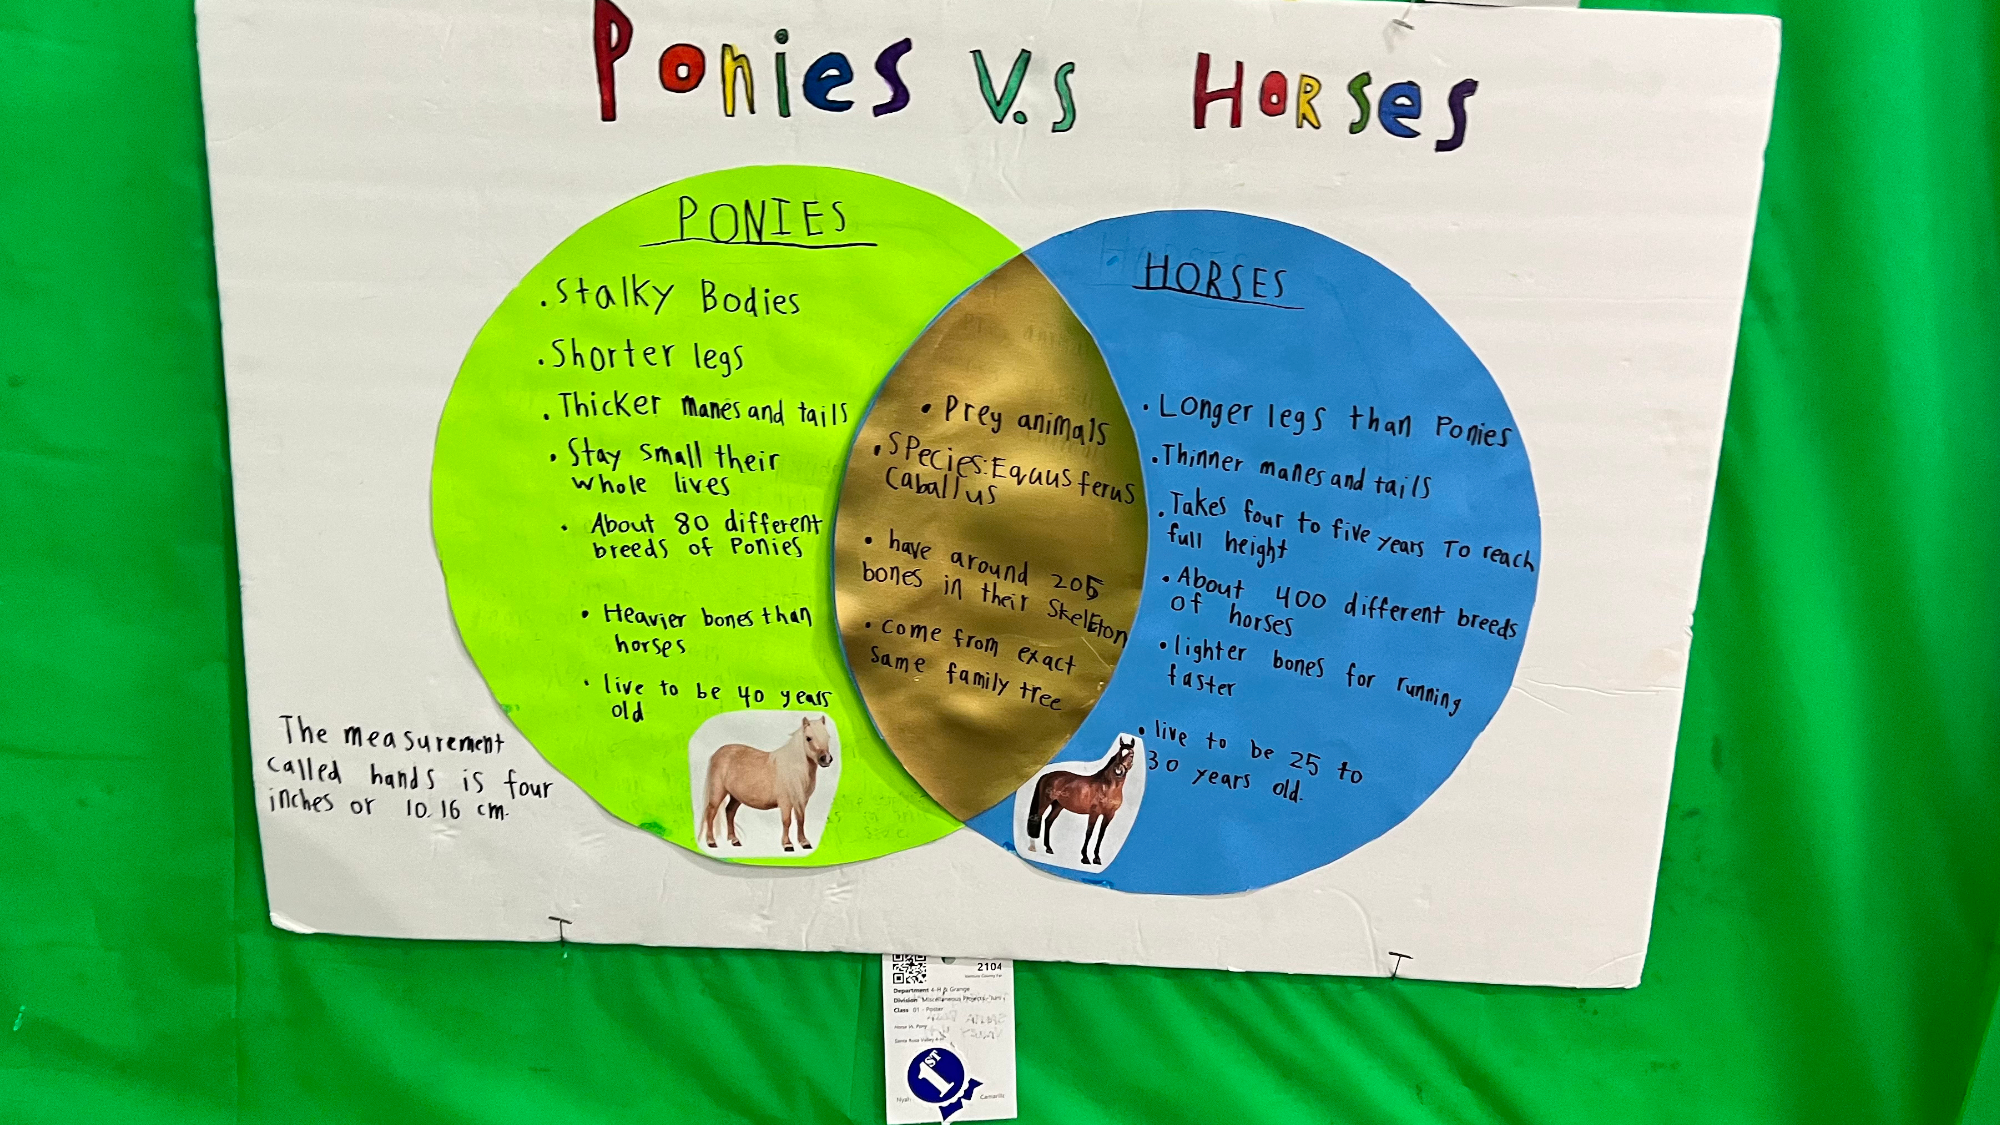 Youth Expo Ponies vs Horses